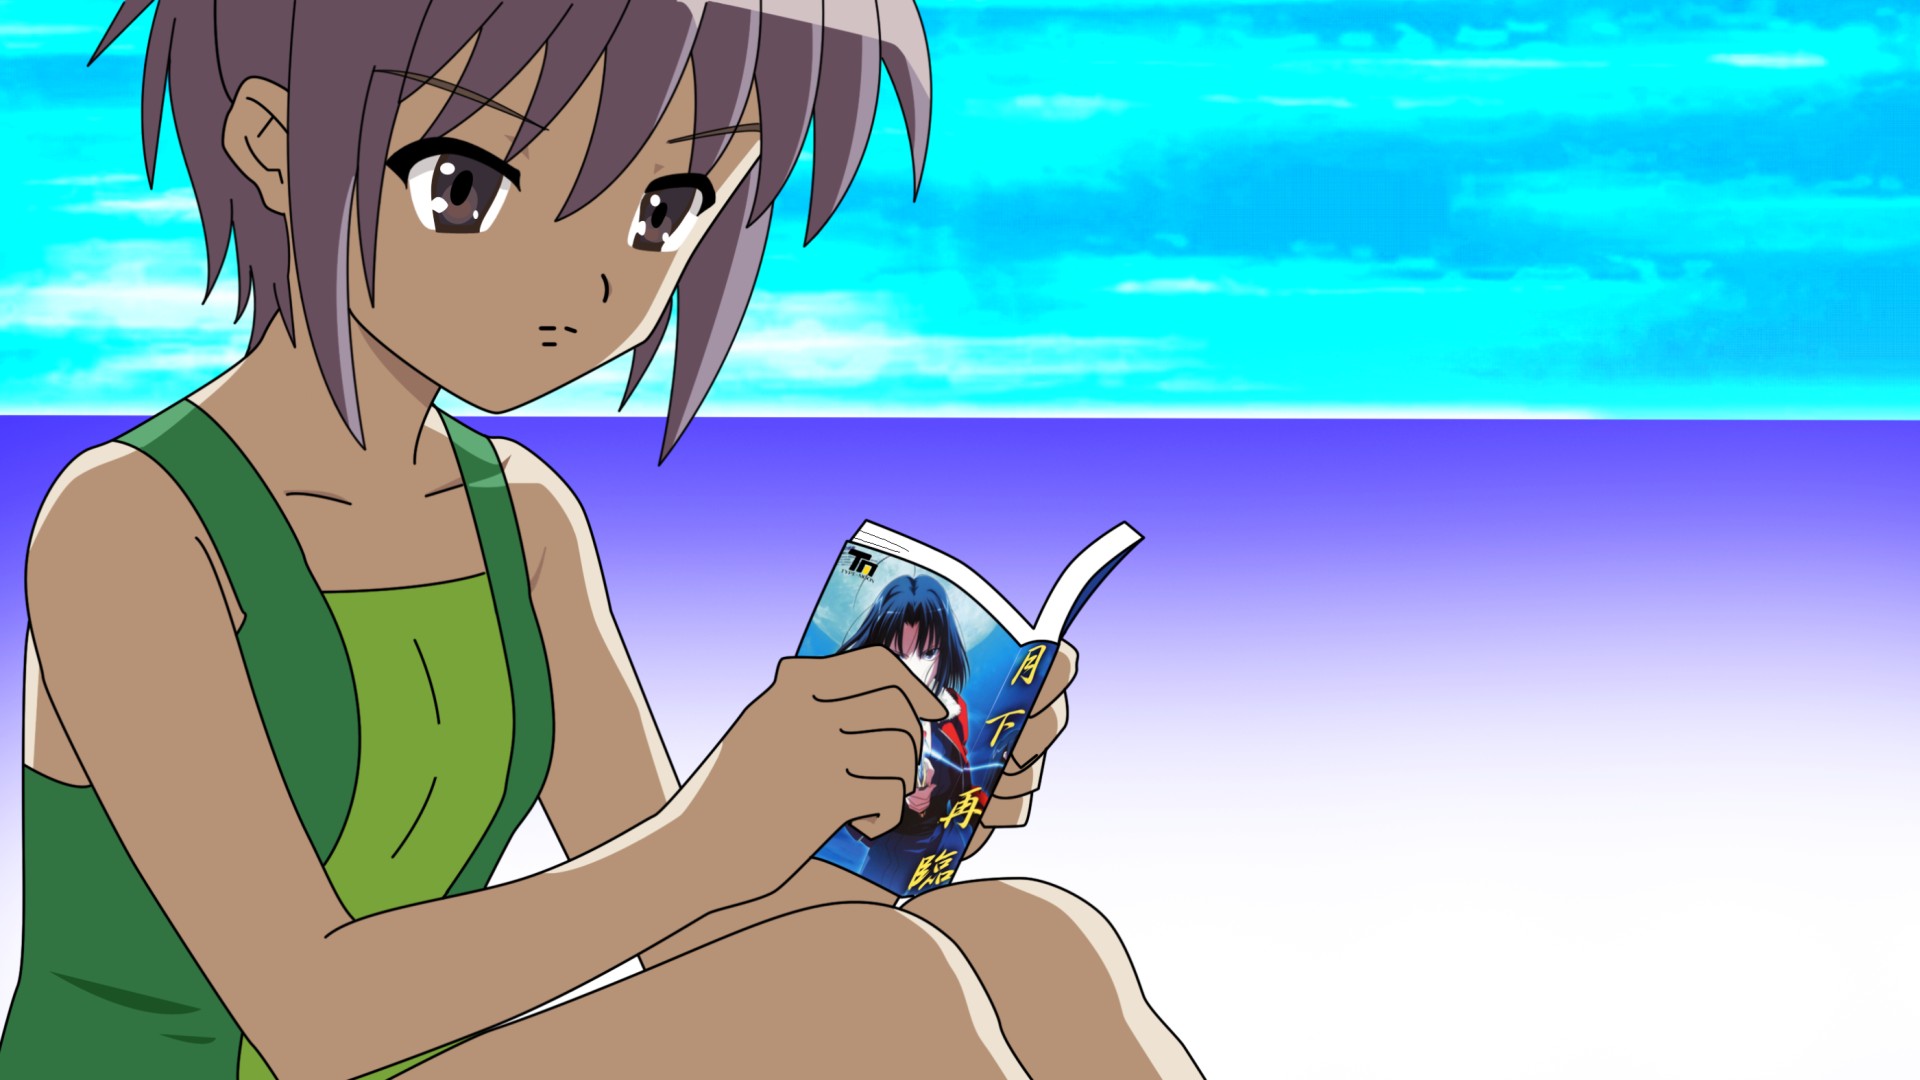 чтение, Нагато Юки, Меланхолия Харухи Судзумии, аниме девушки, колени вместе - обои на рабочий стол